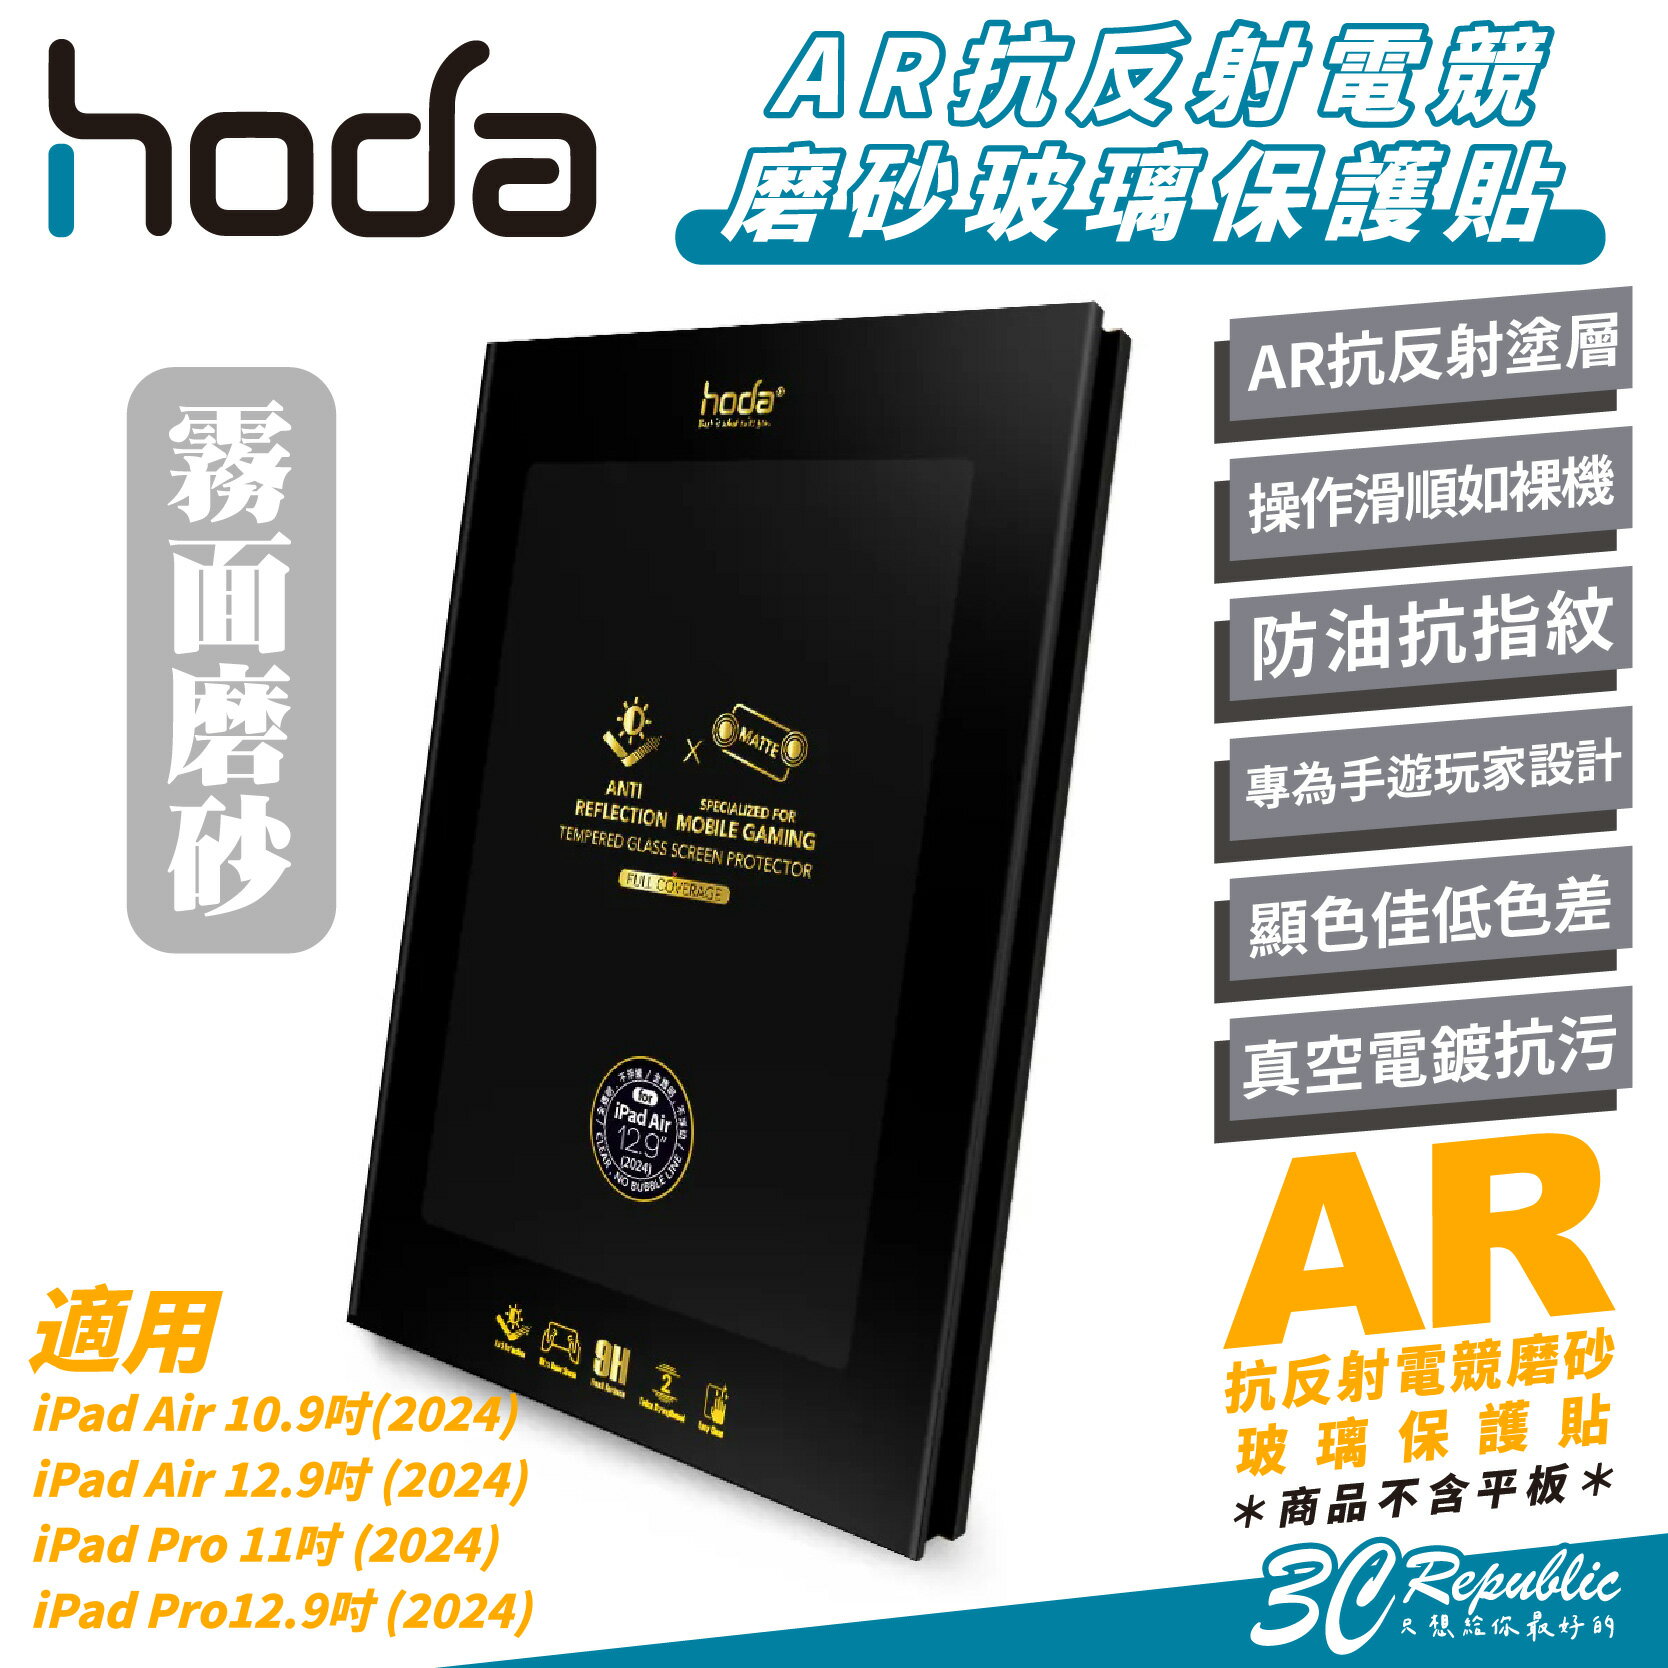 Hoda AR 霧面 抗反射 9H 電競 磨砂 玻璃貼 保護貼 螢幕貼 適 iPad Air 6 Pro 11 13 吋